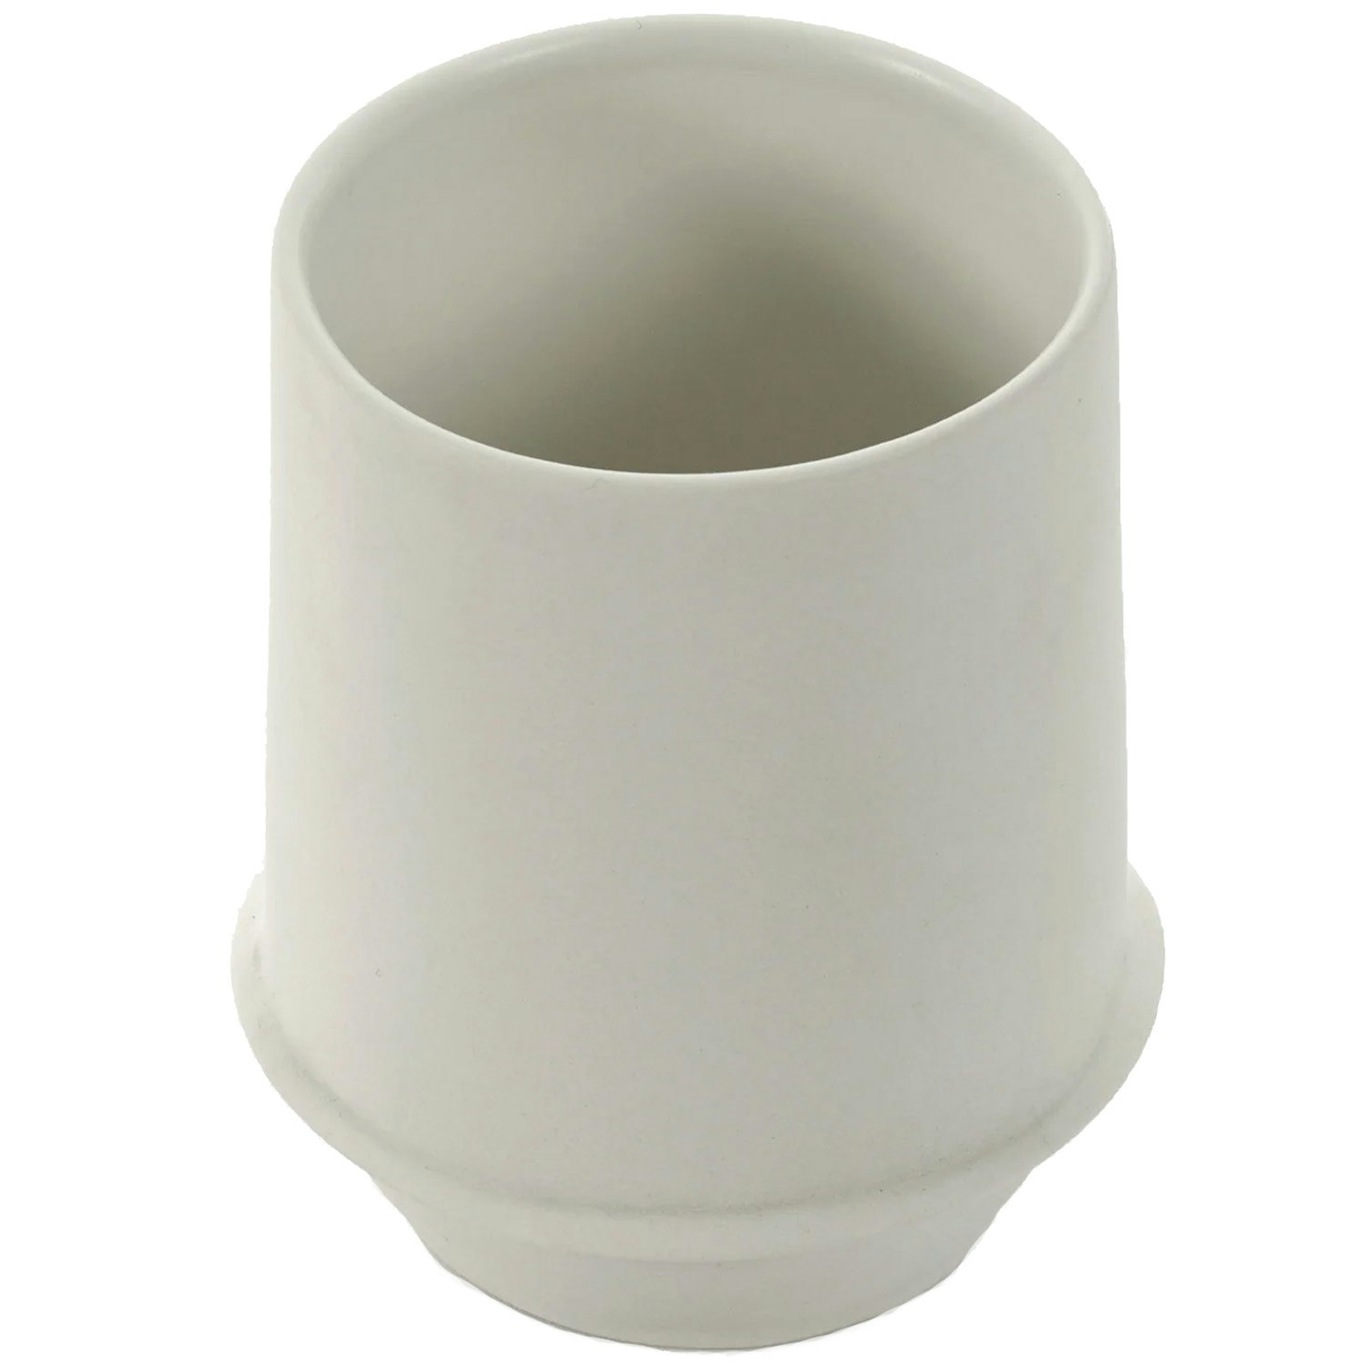 Leggy Coffee Cup Handles : cup handles